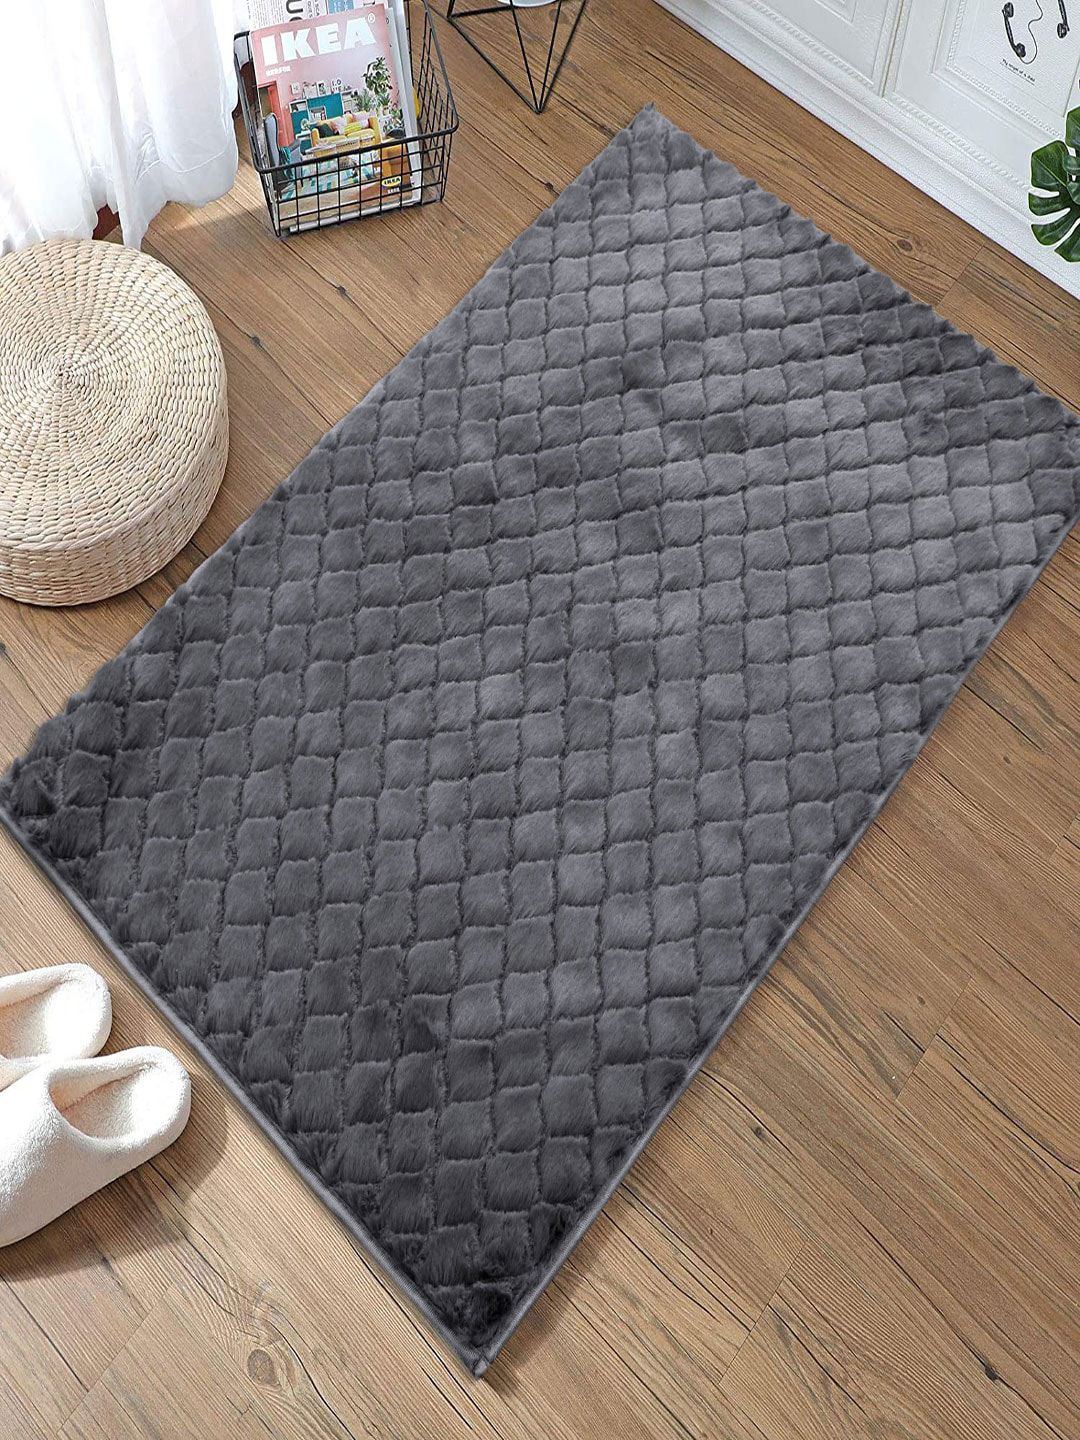 LUXEHOME INTERNATIONAL Grey Textured Doormats Price in India